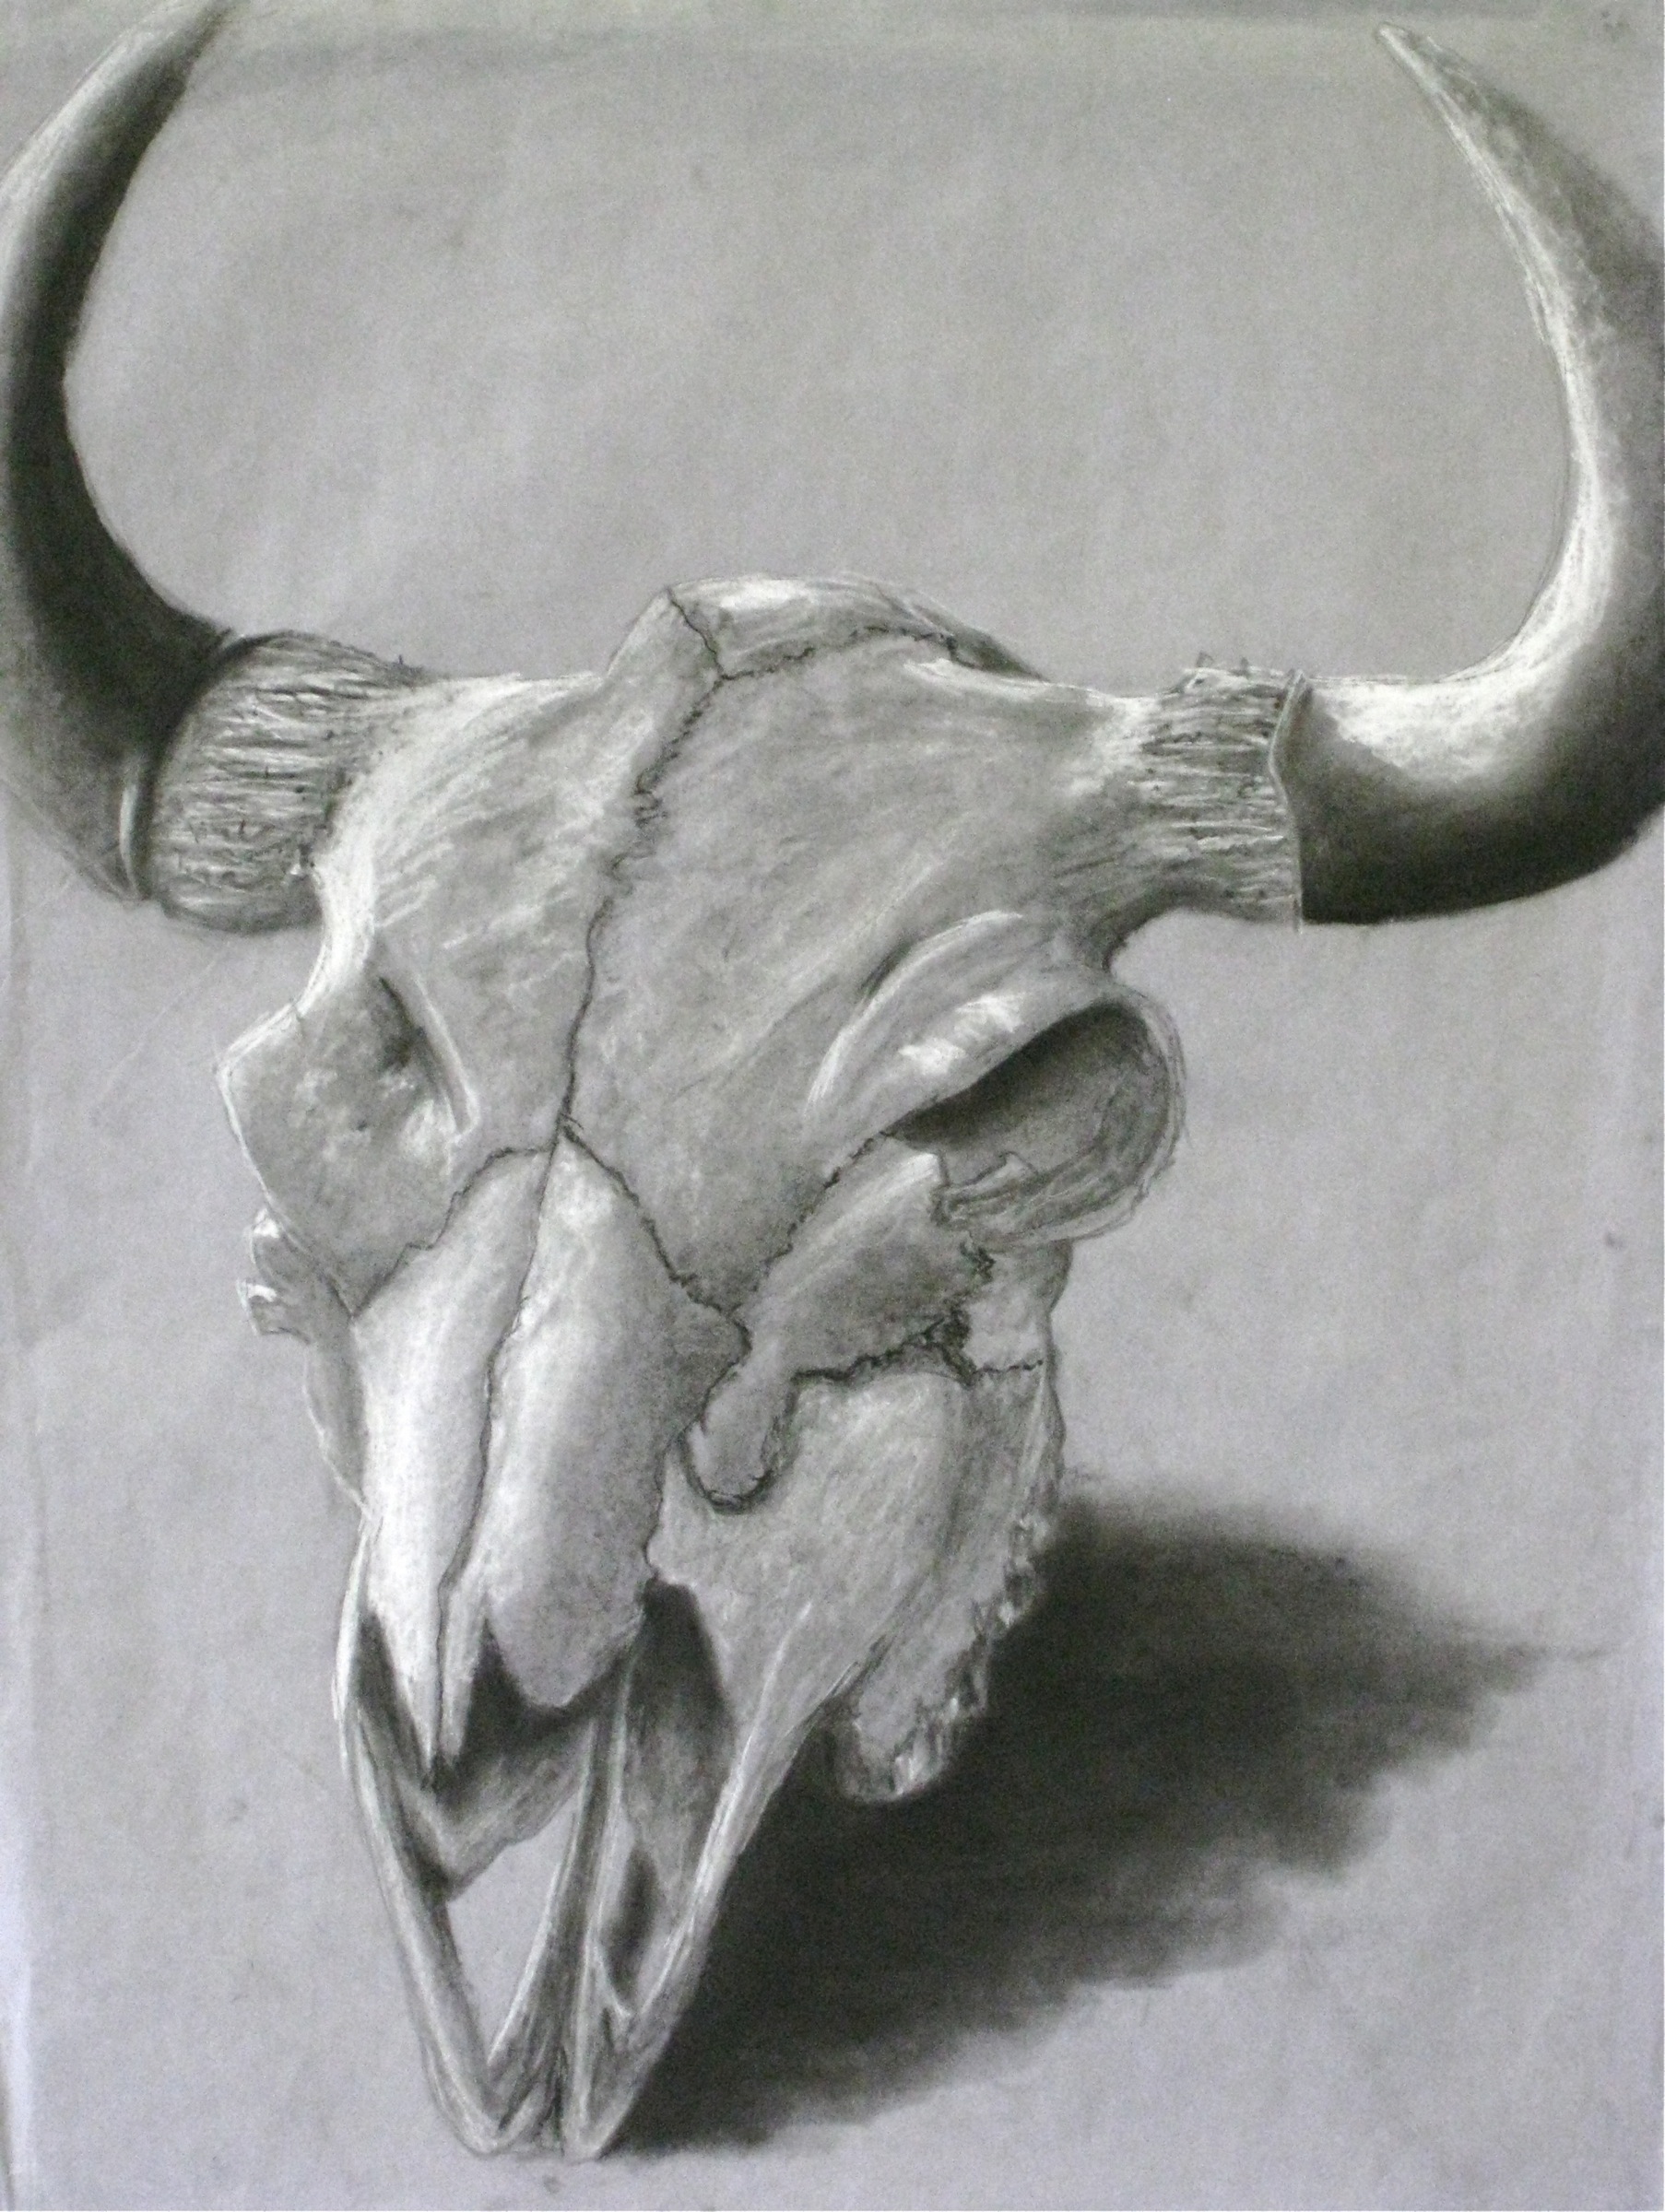 Buffalo Skull Drawing at Explore collection of